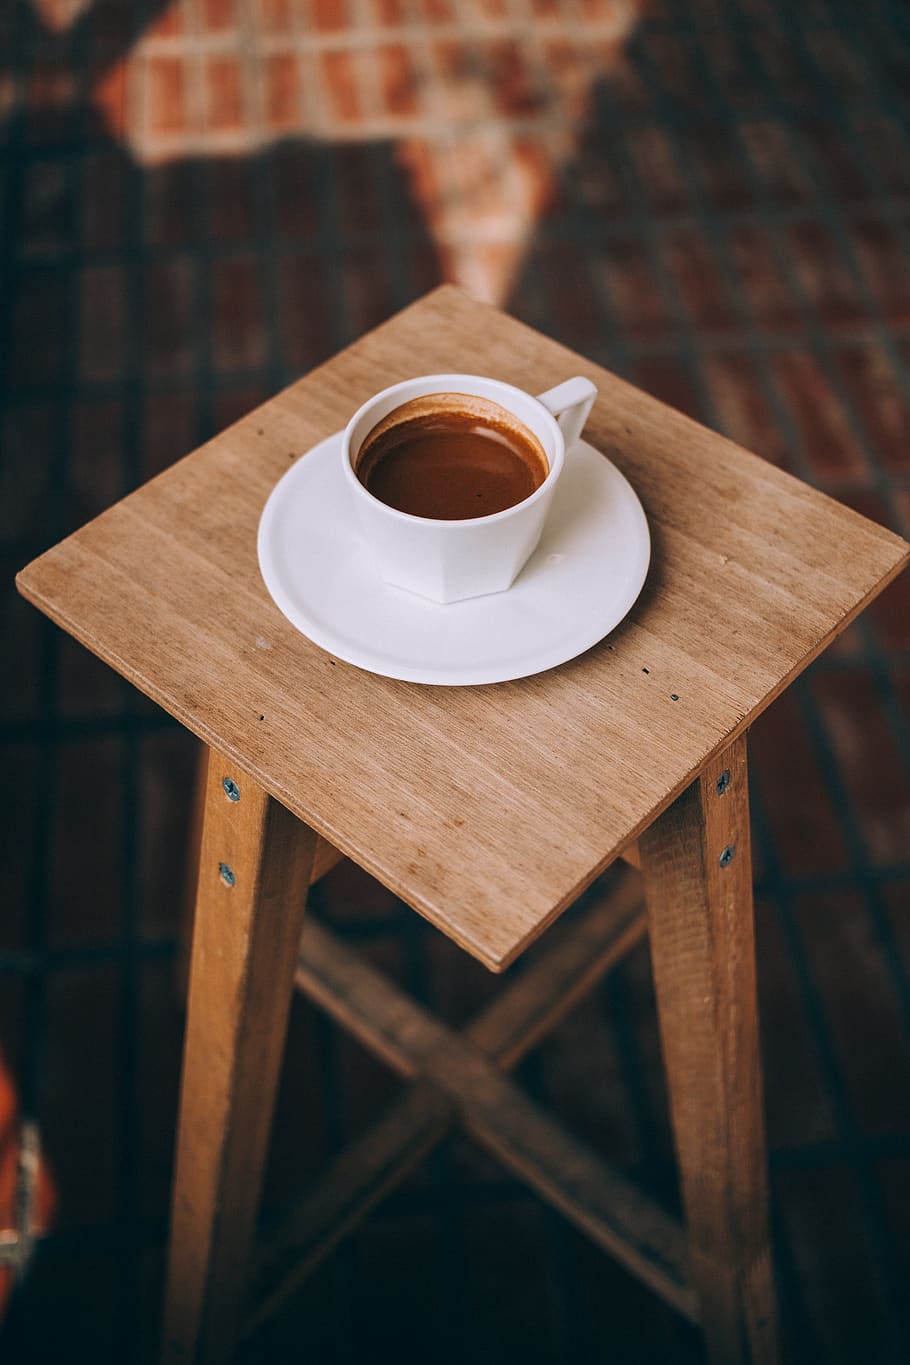 coffee, cup, table, beverage, drink, brew, caffeine, mug, wooden, stool